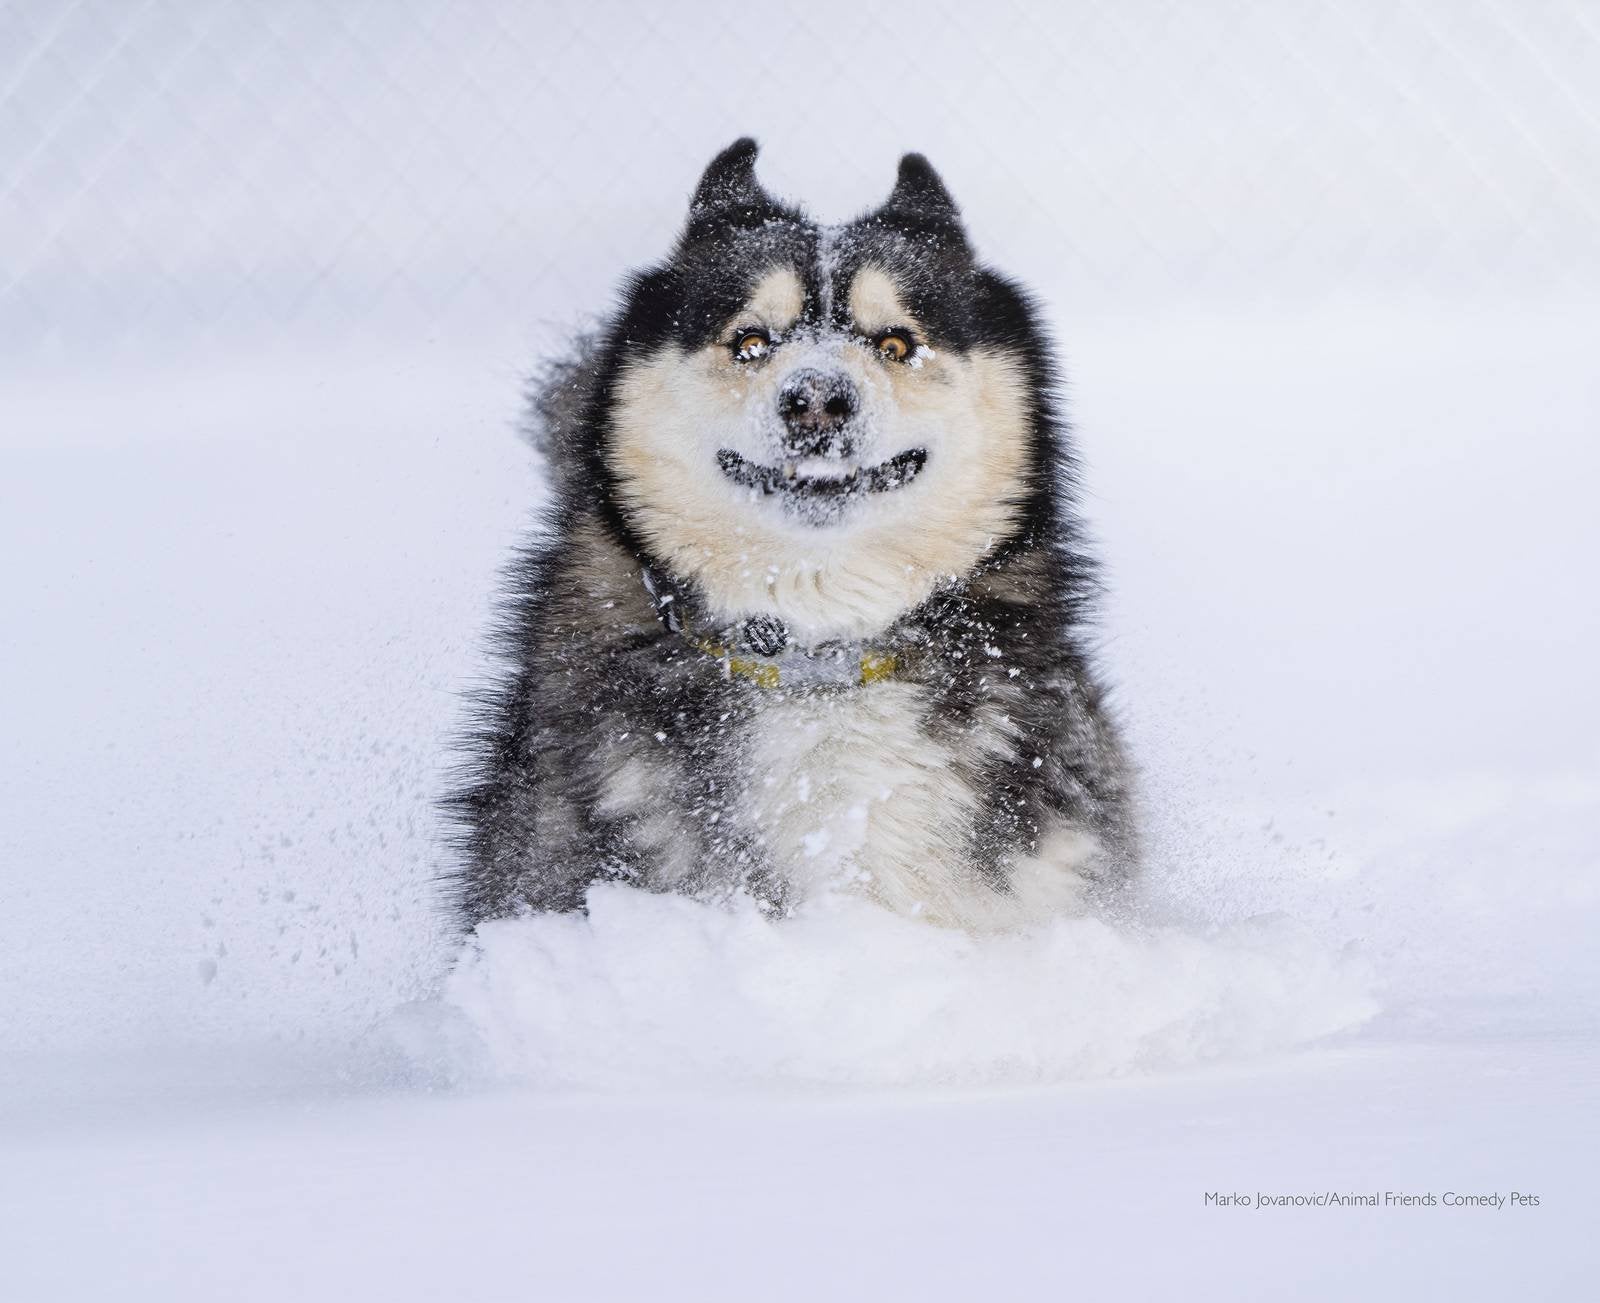 dog dashing through the snow with a funny face.